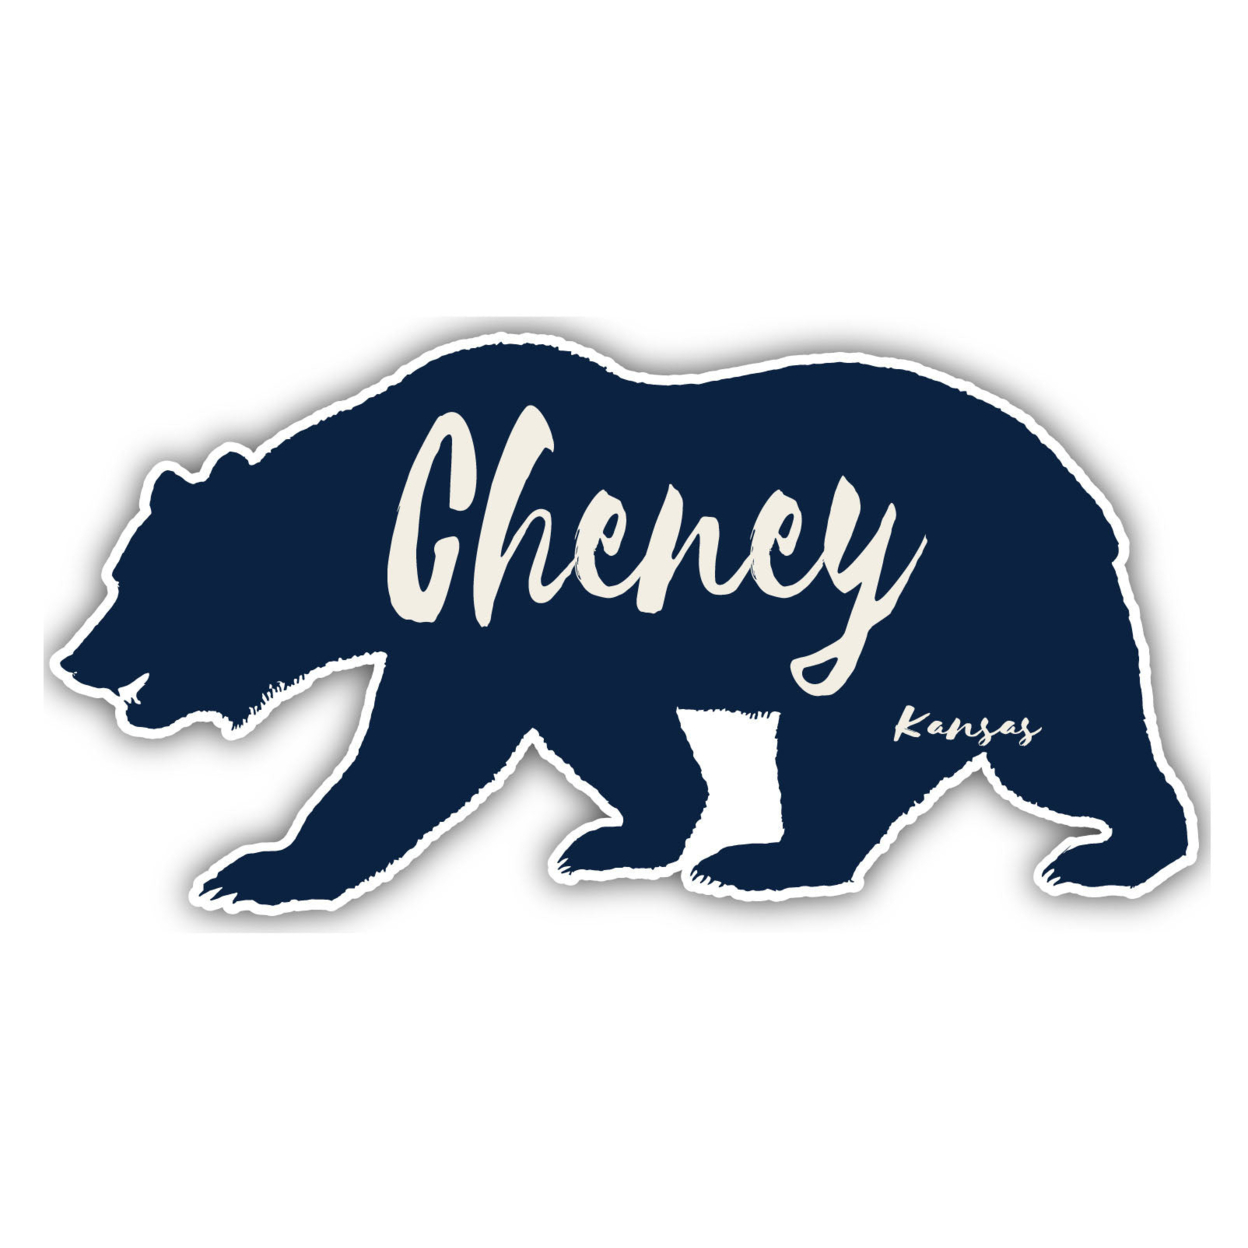 Cheney Kansas Souvenir Decorative Stickers (Choose Theme And Size) - Single Unit, 8-Inch, Bear